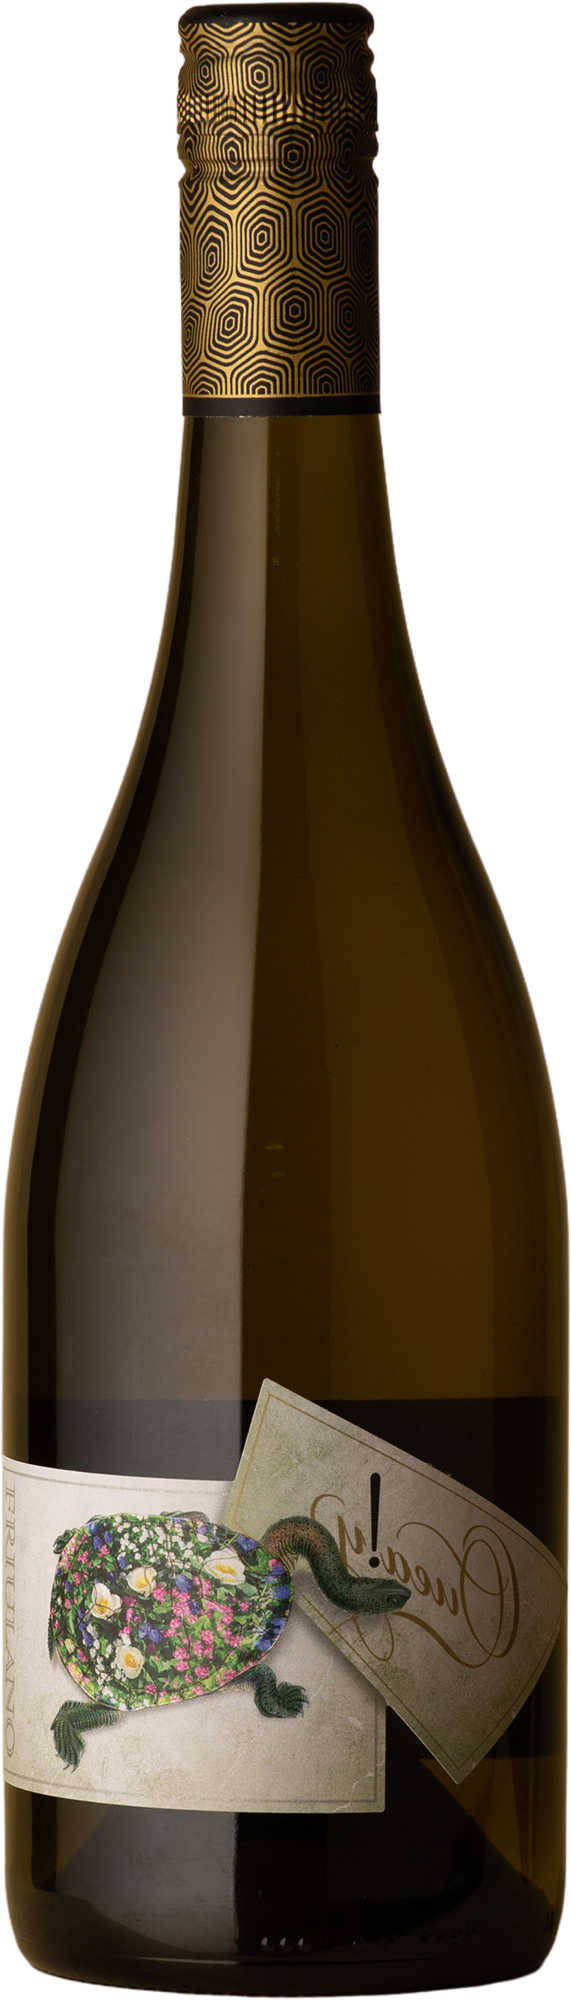 Quealy - Friulano 2019 White Wine